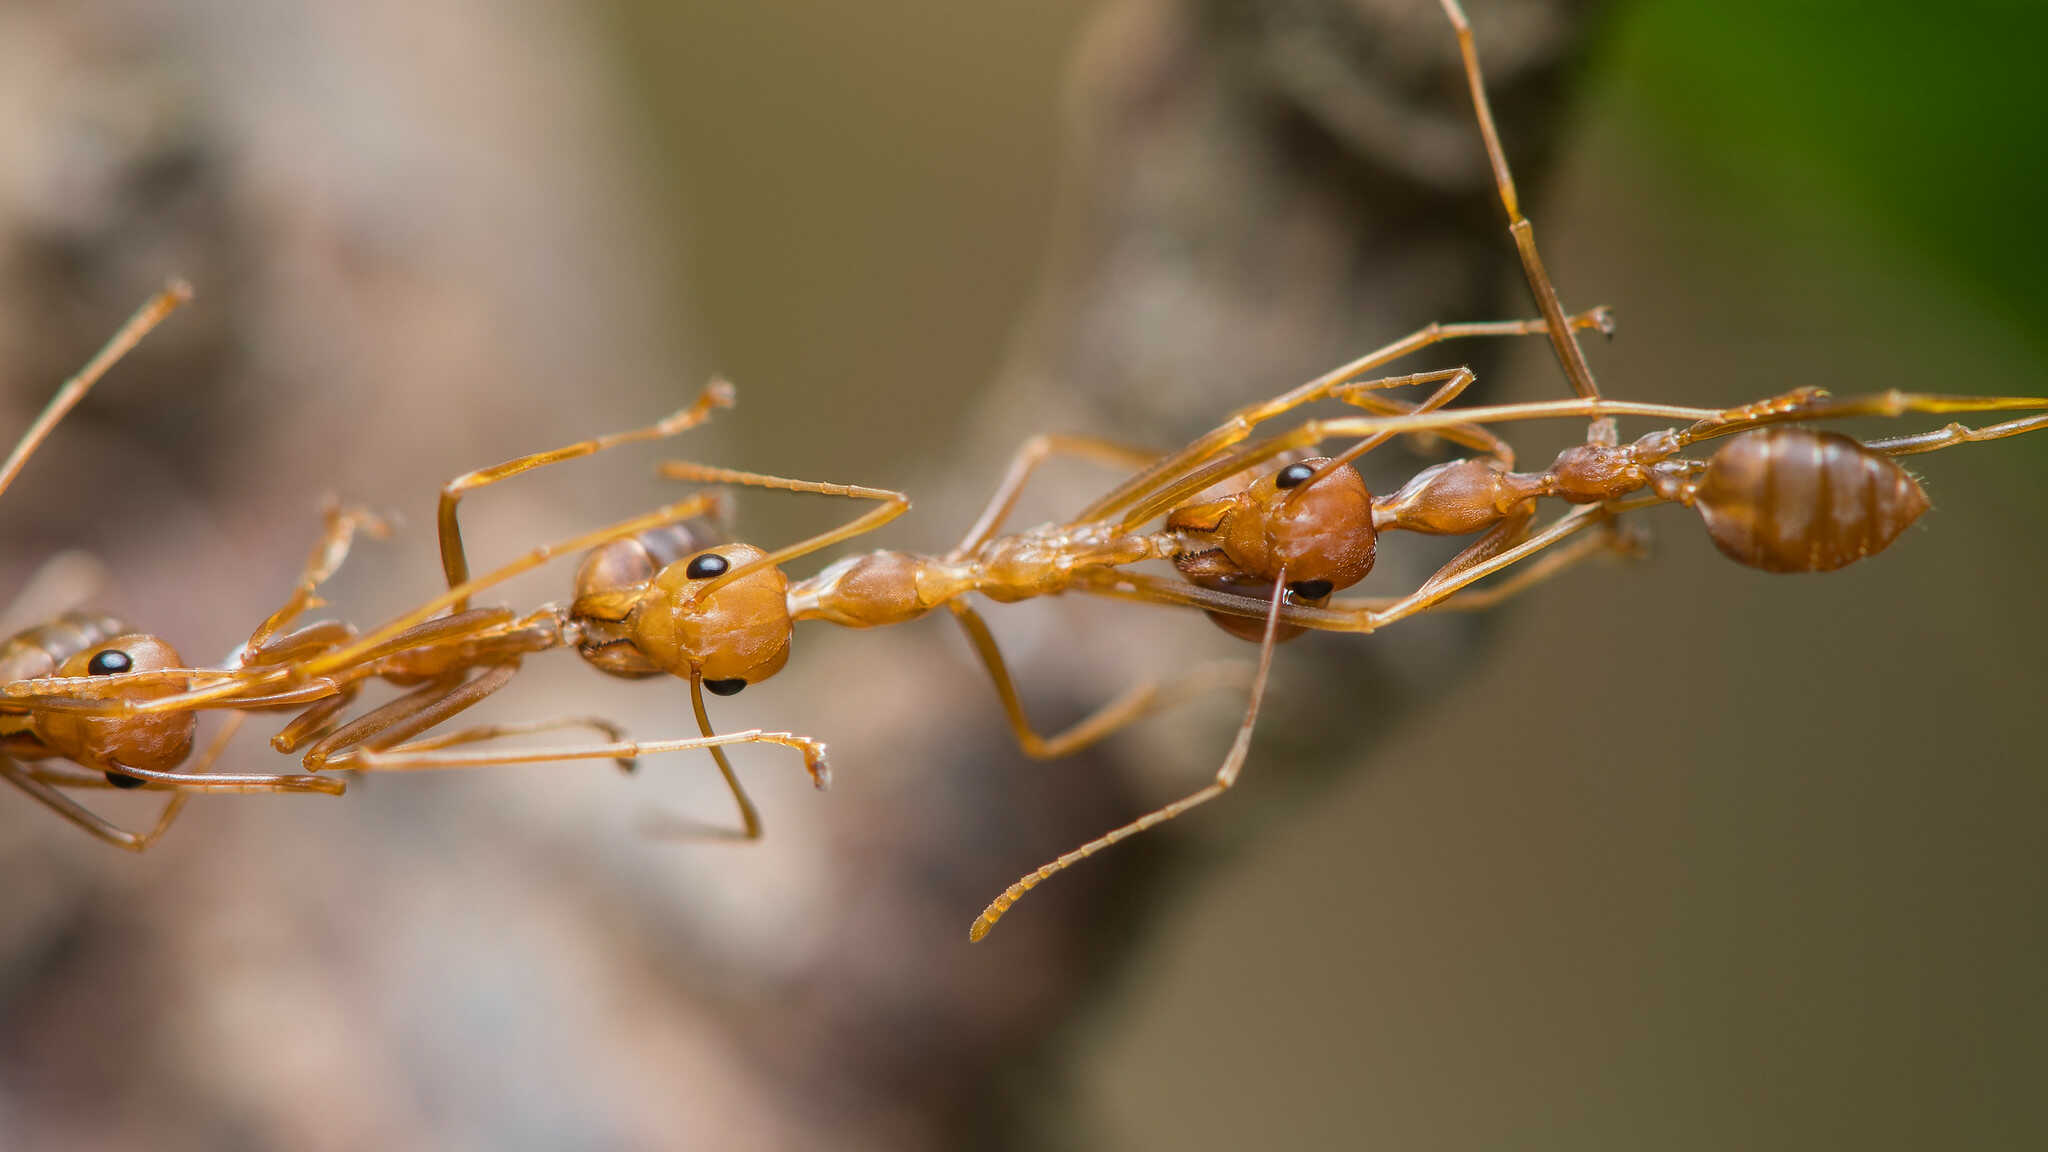 Croucher Ecology | Weaver Ant